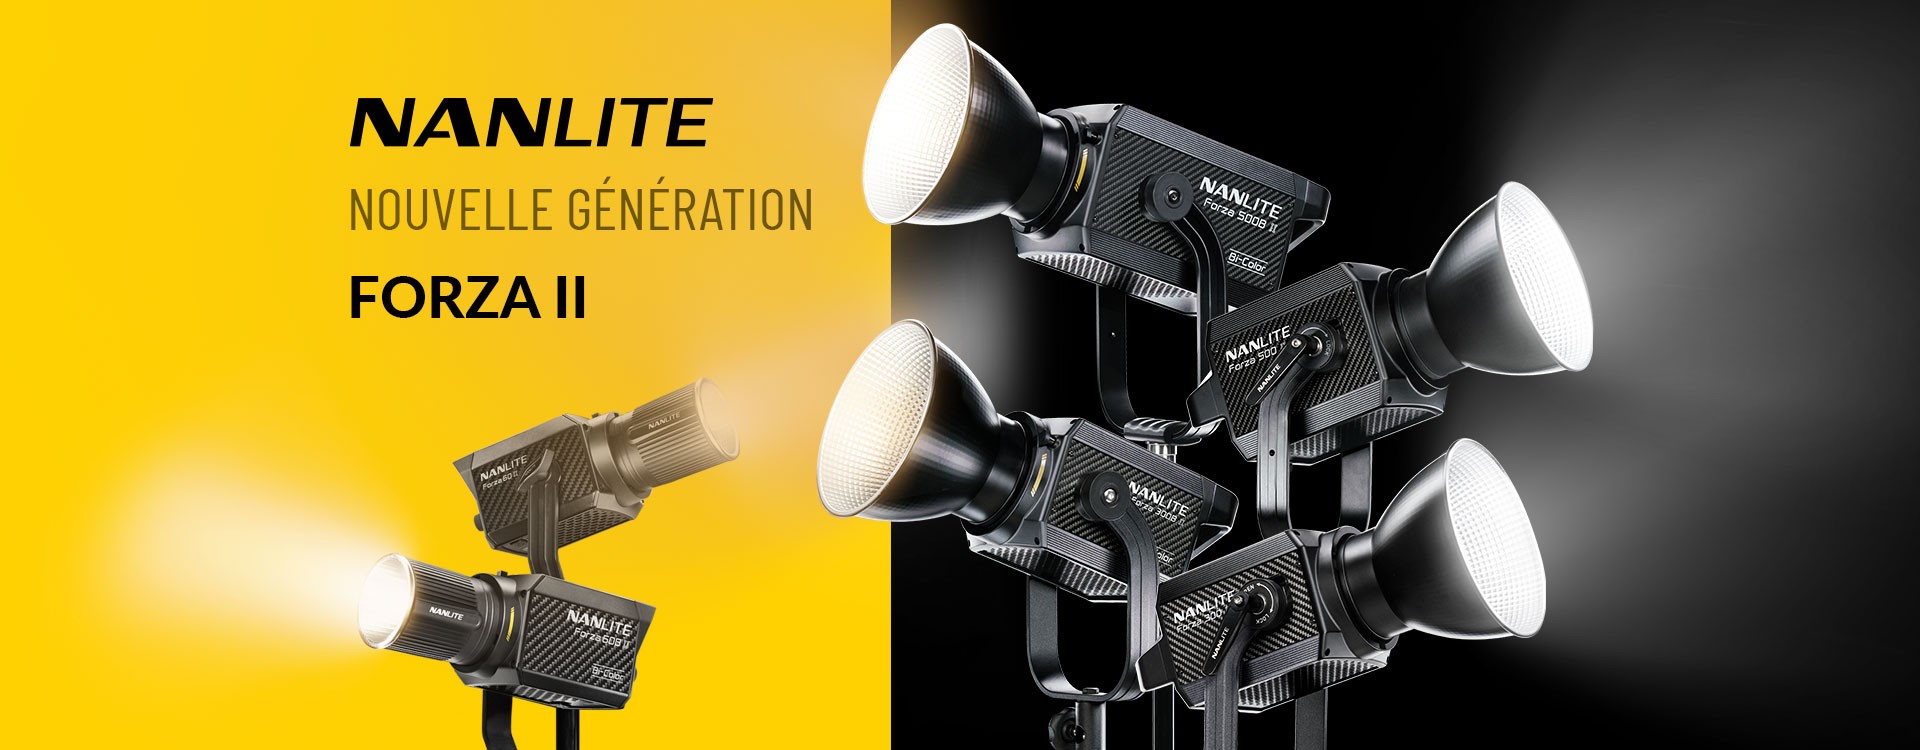 Nanlite lance la deuxième génération de Forza 60/60B II, Forza 300/300B II et Forza 500/500B II